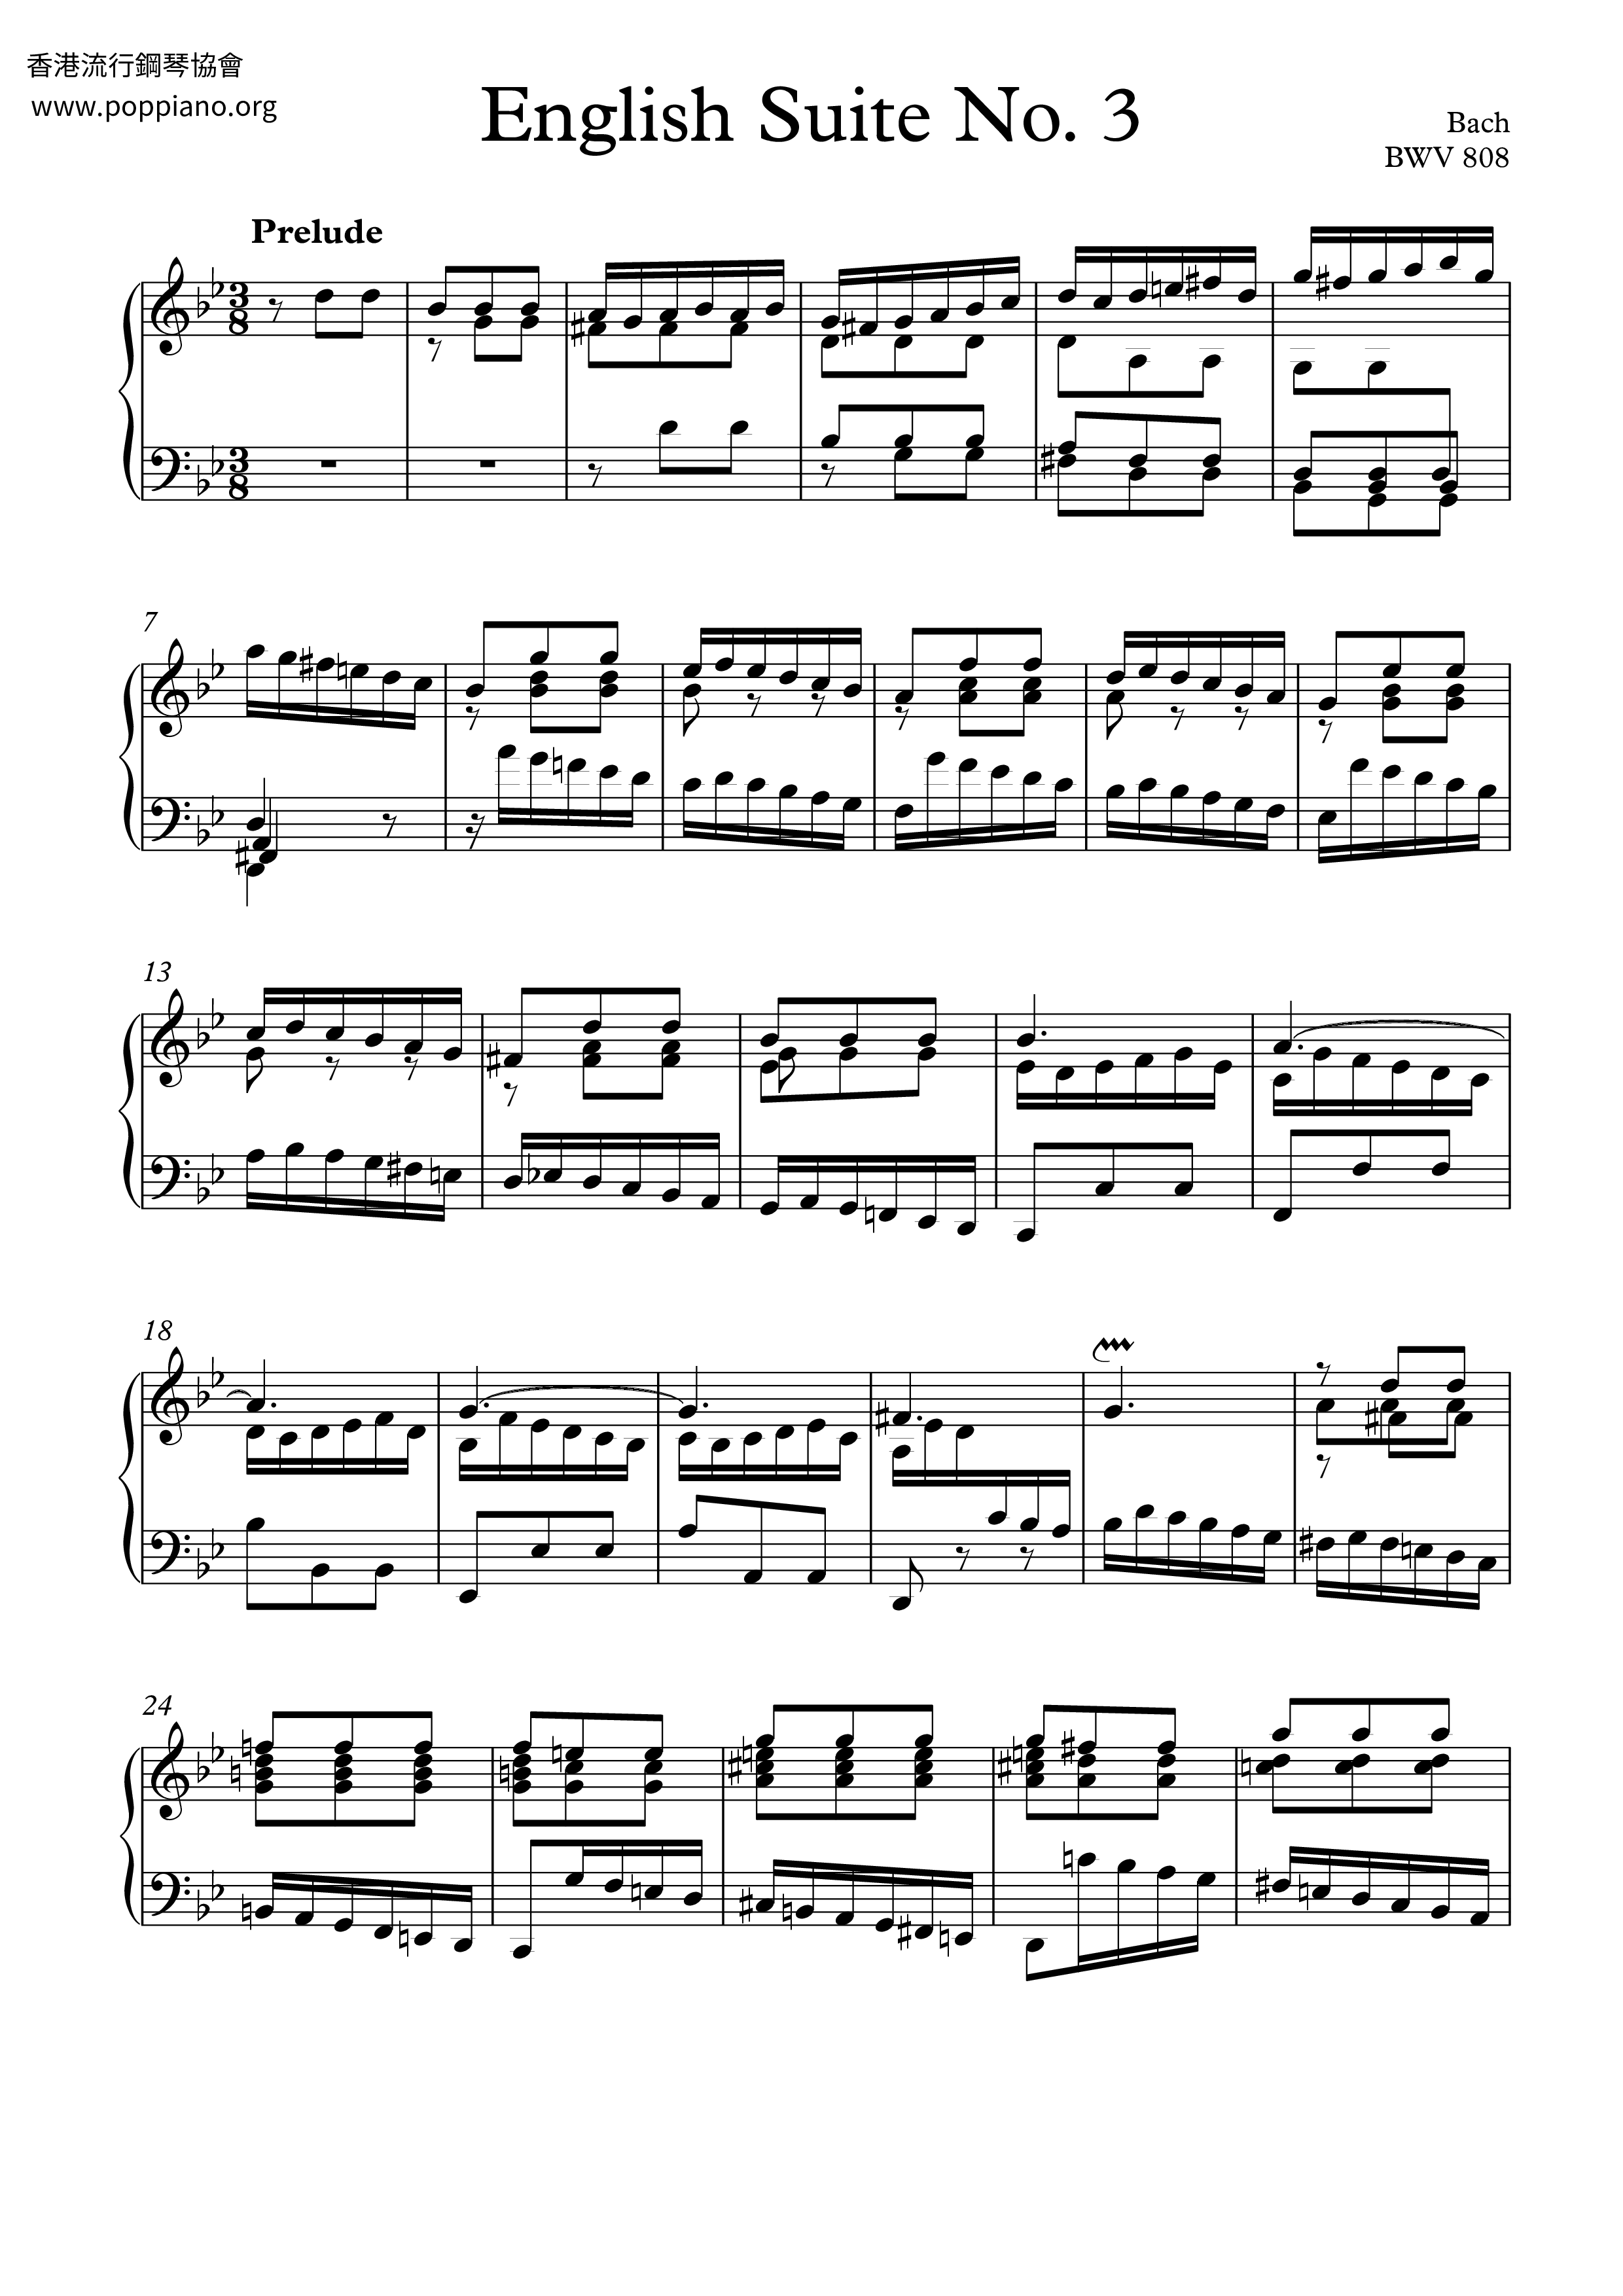 English Suite No. 3, BWV 808 Score